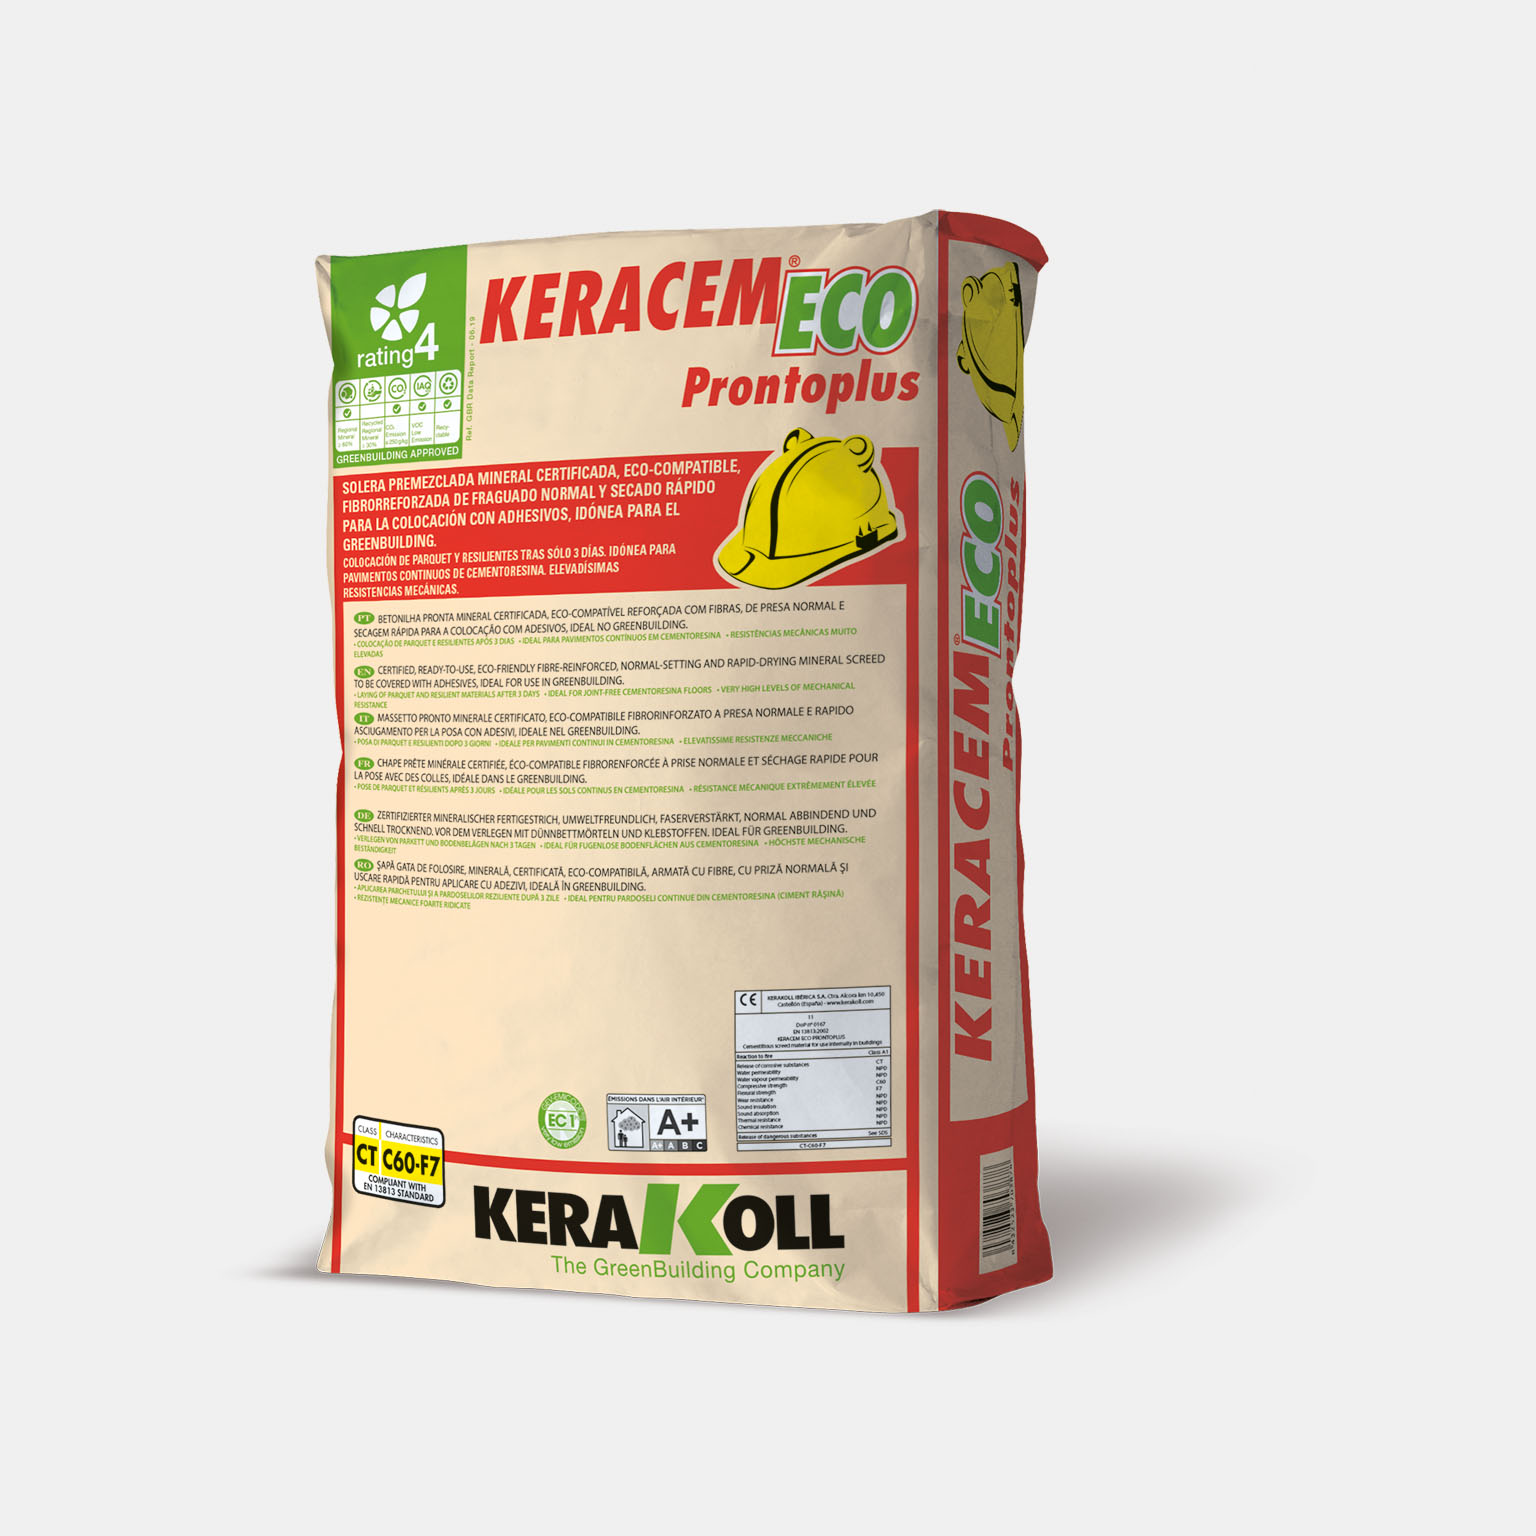 Keracem Eco Prontoplus - immagine pack